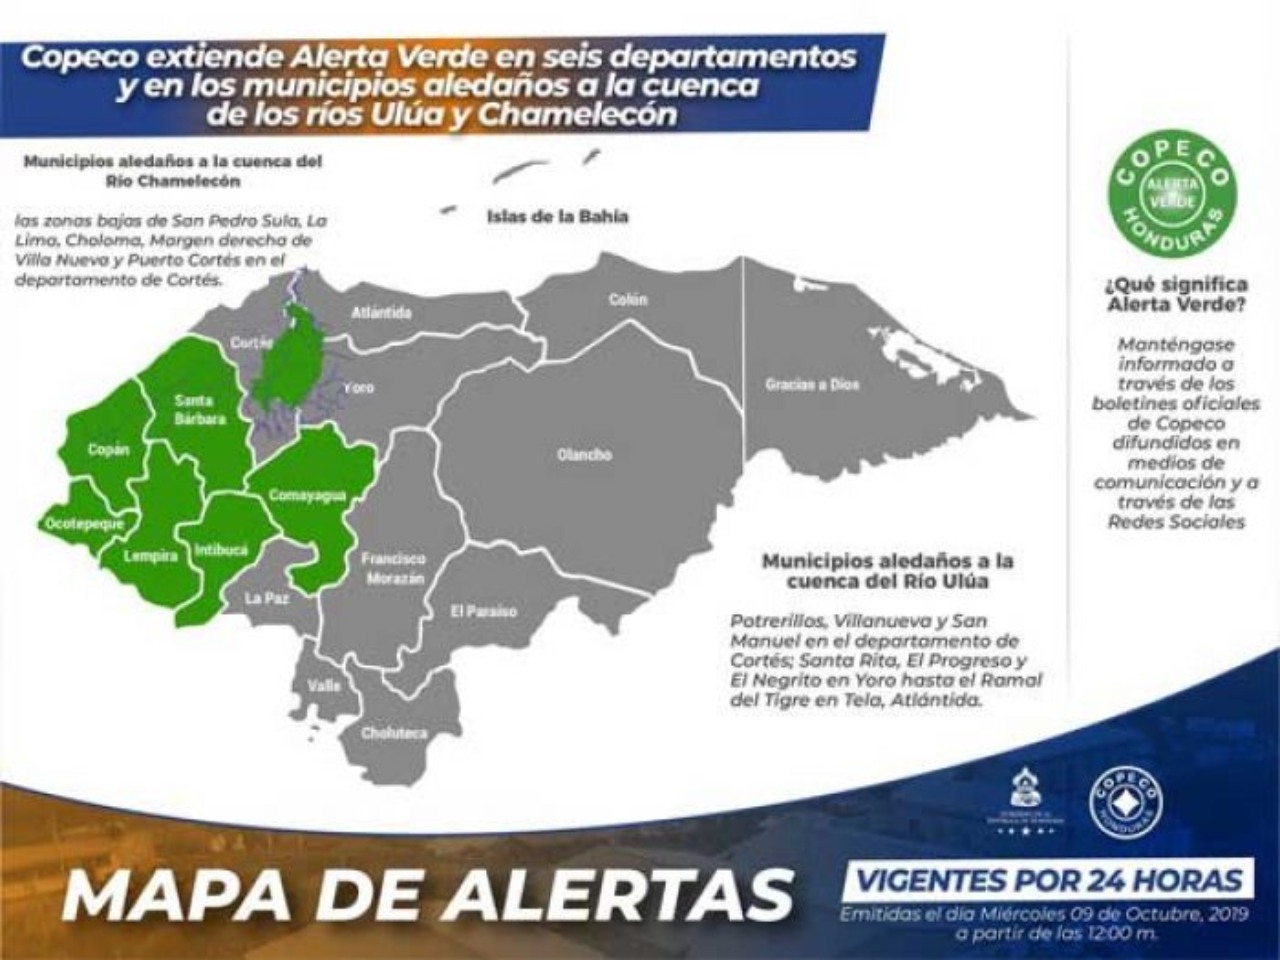 alerta verde seis departamentos Honduras